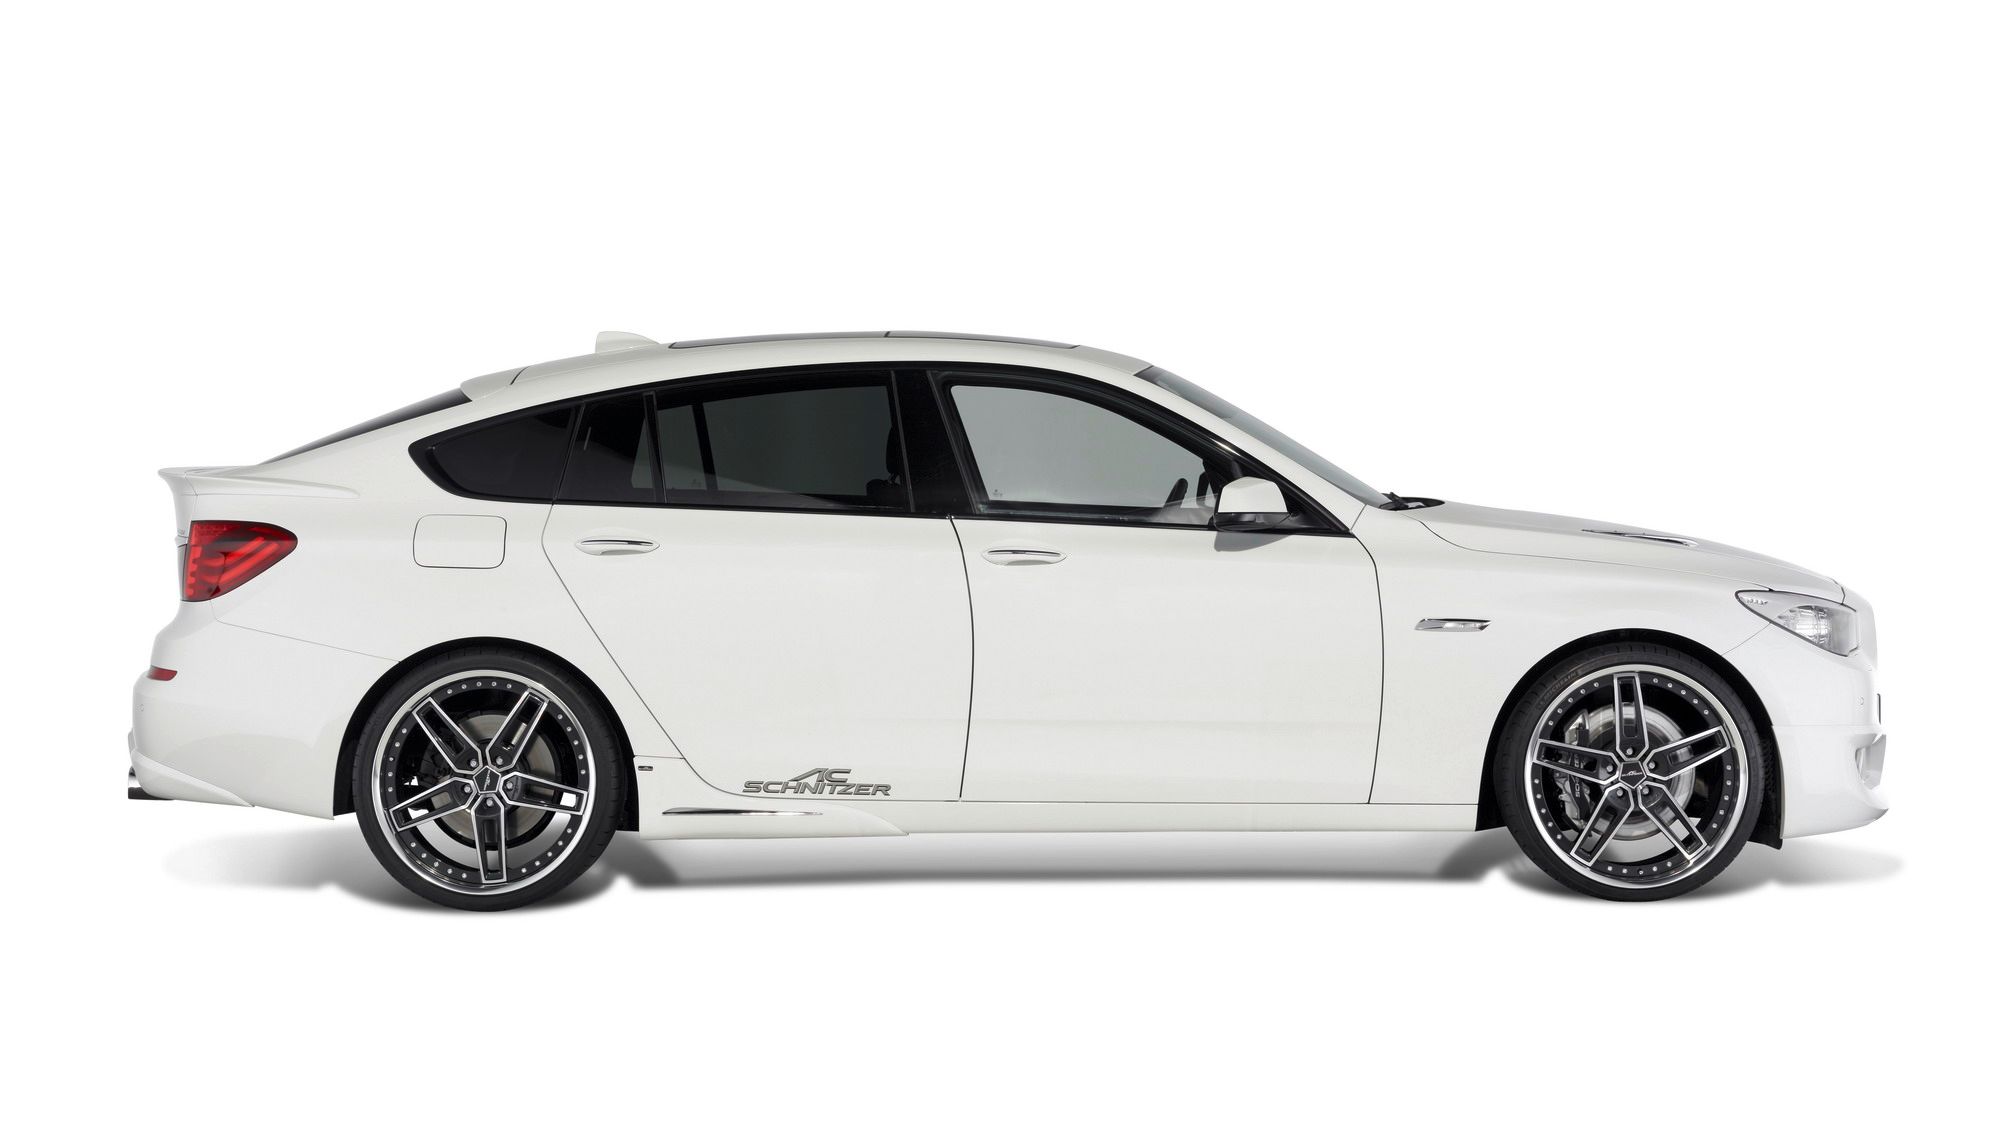 2010 - 2010 BMW 5-Series GT by AC Schnitzer